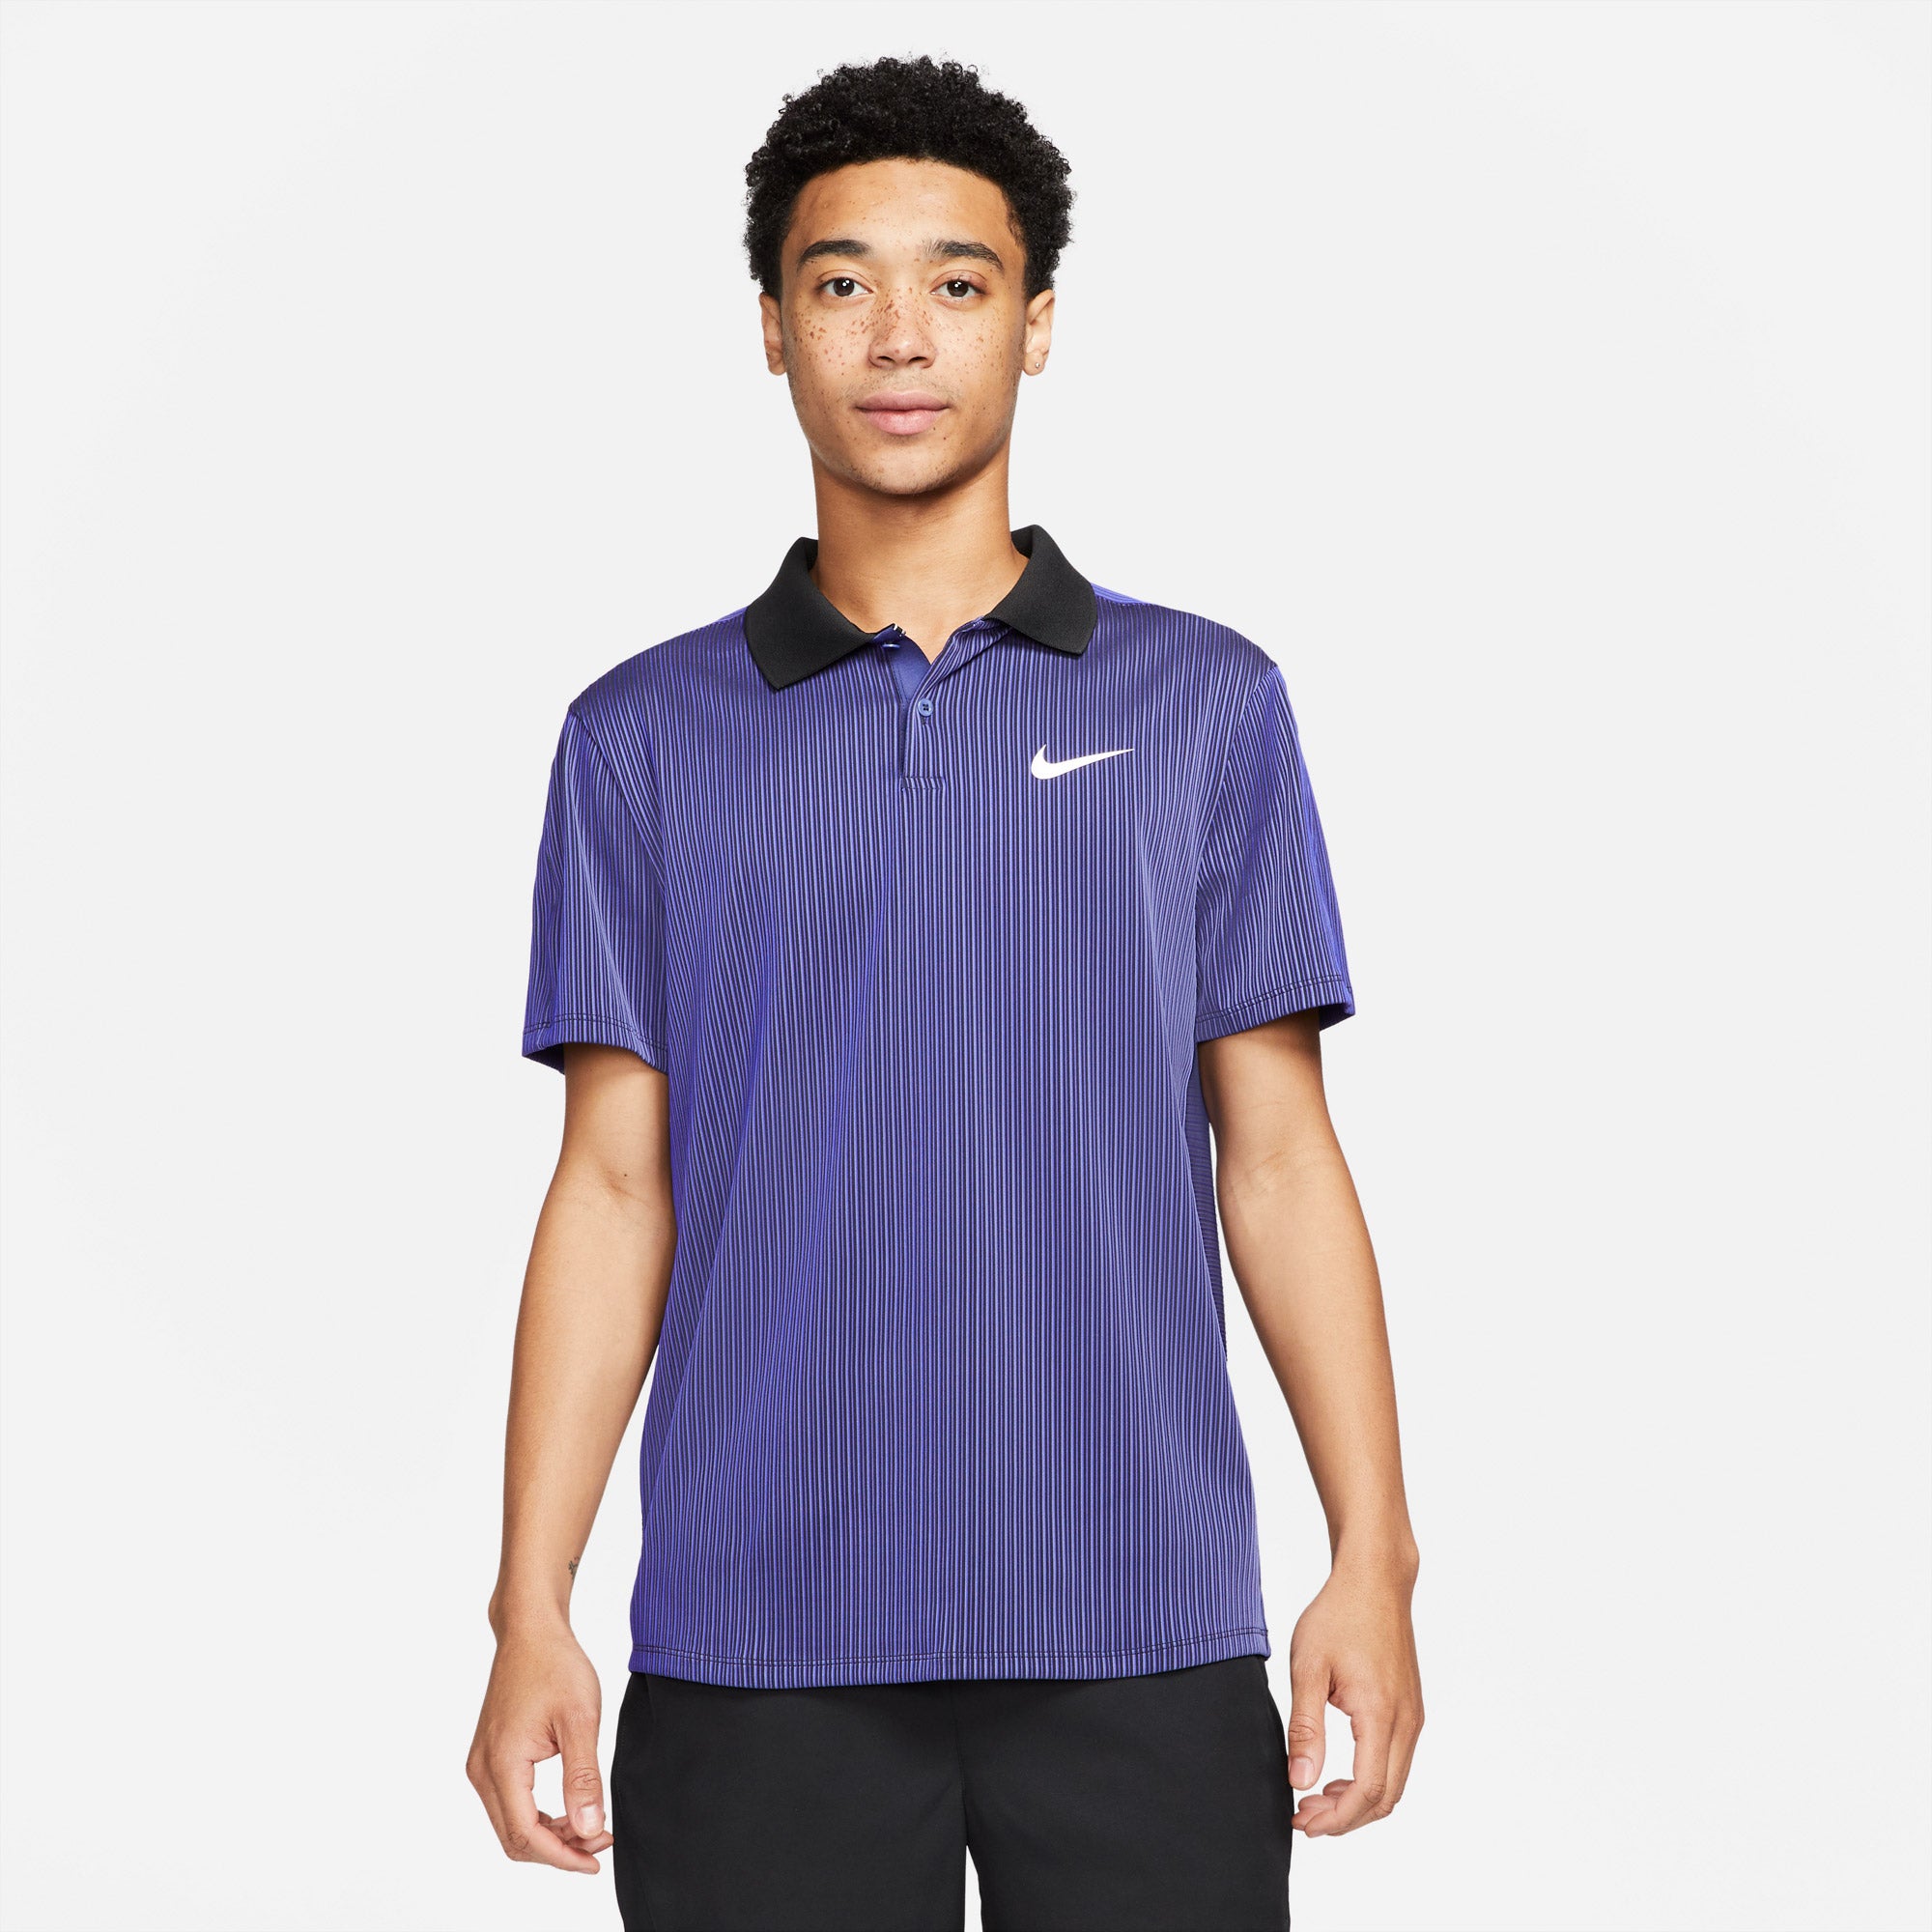 Nike Dri-FIT ADV Slam Men's Tennis Polo Purple (1)